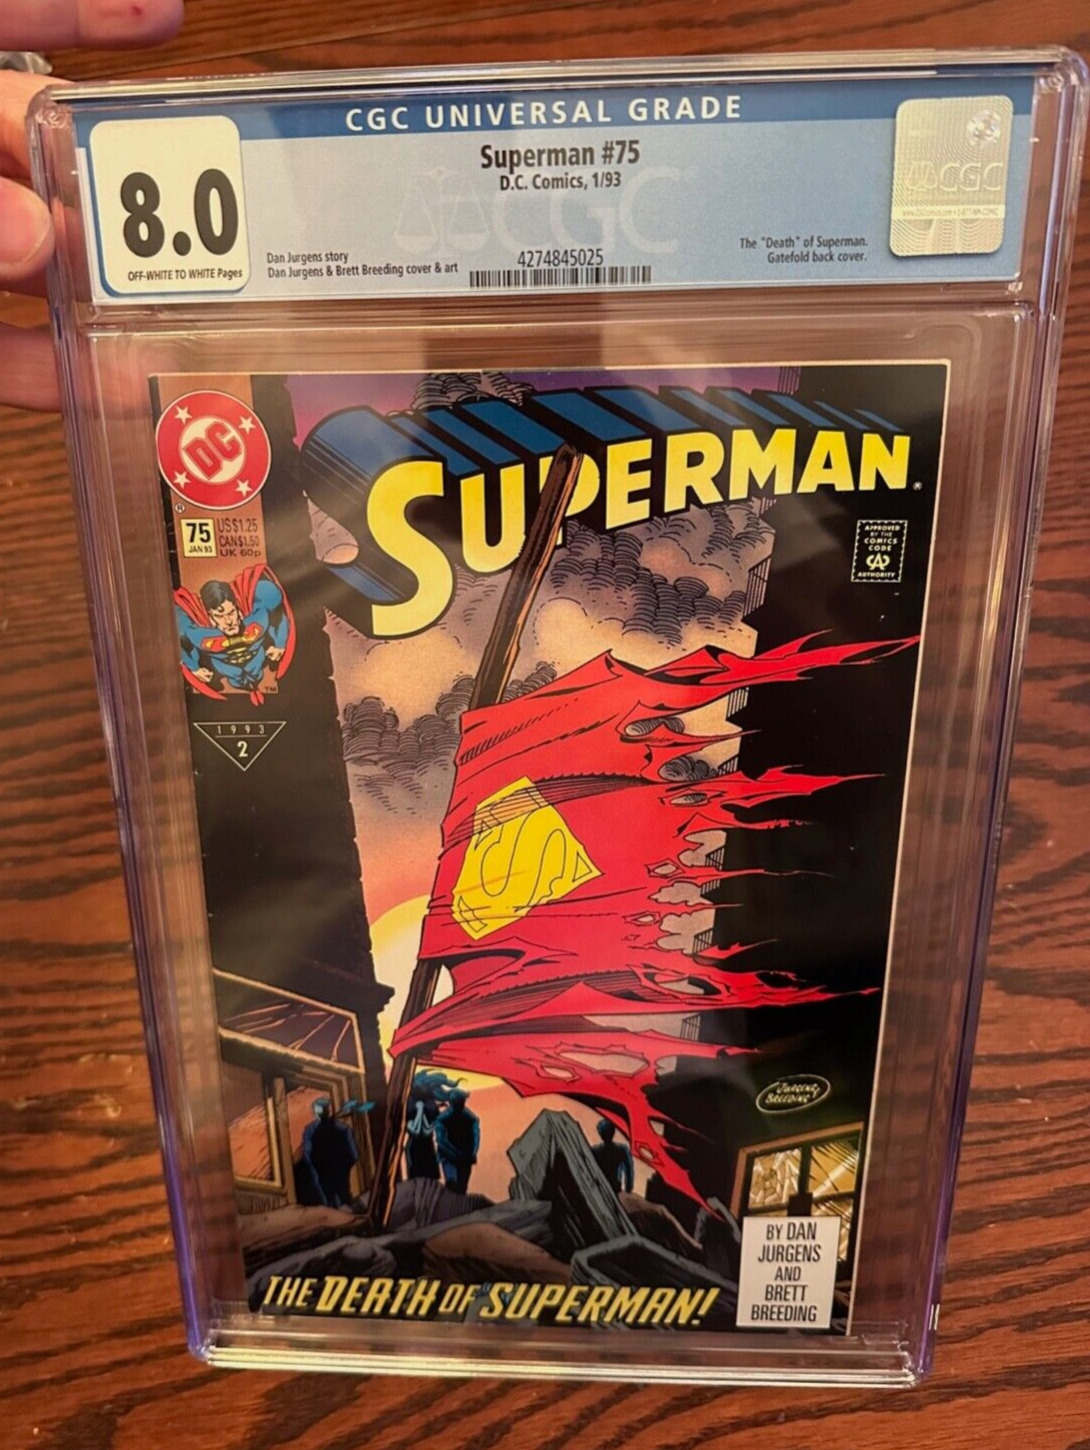 SUPERMAN #75 - CGC 8.0 - DEATH OF SUPERMAN 1/93 1st Printing Gatefold